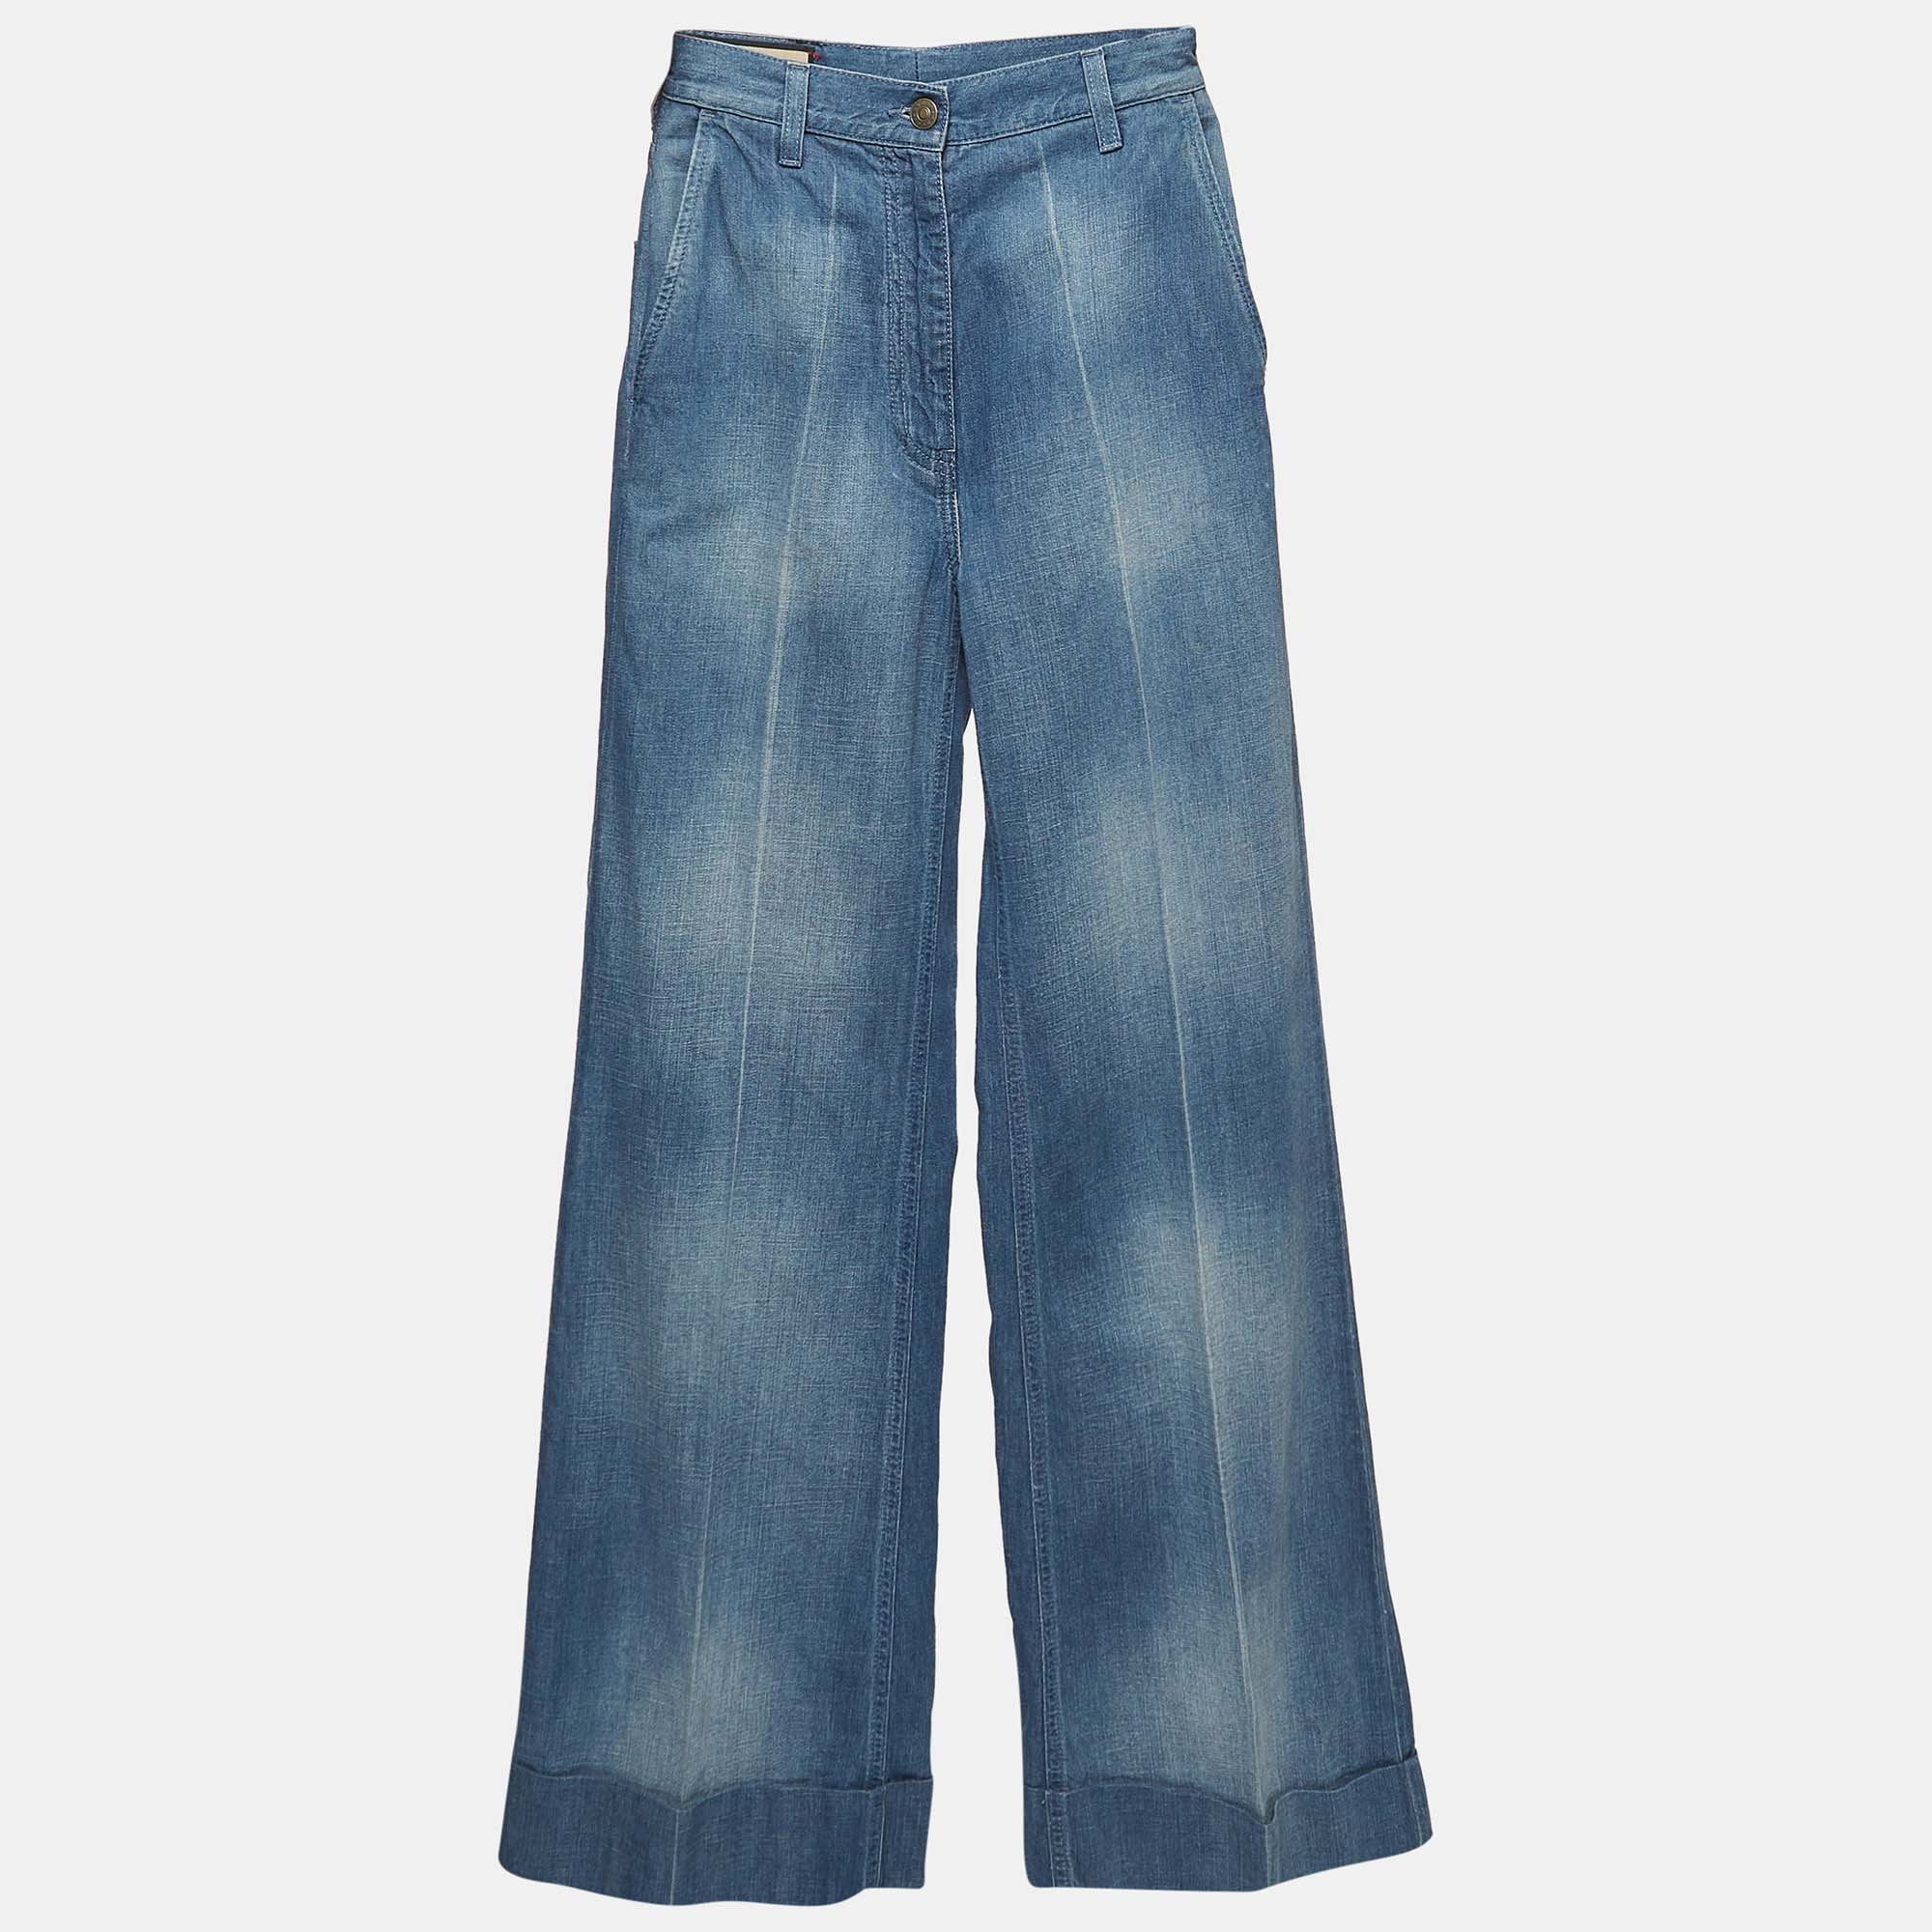 

Gucci Blue Washed Denim Flared Jeans S Waist 24"